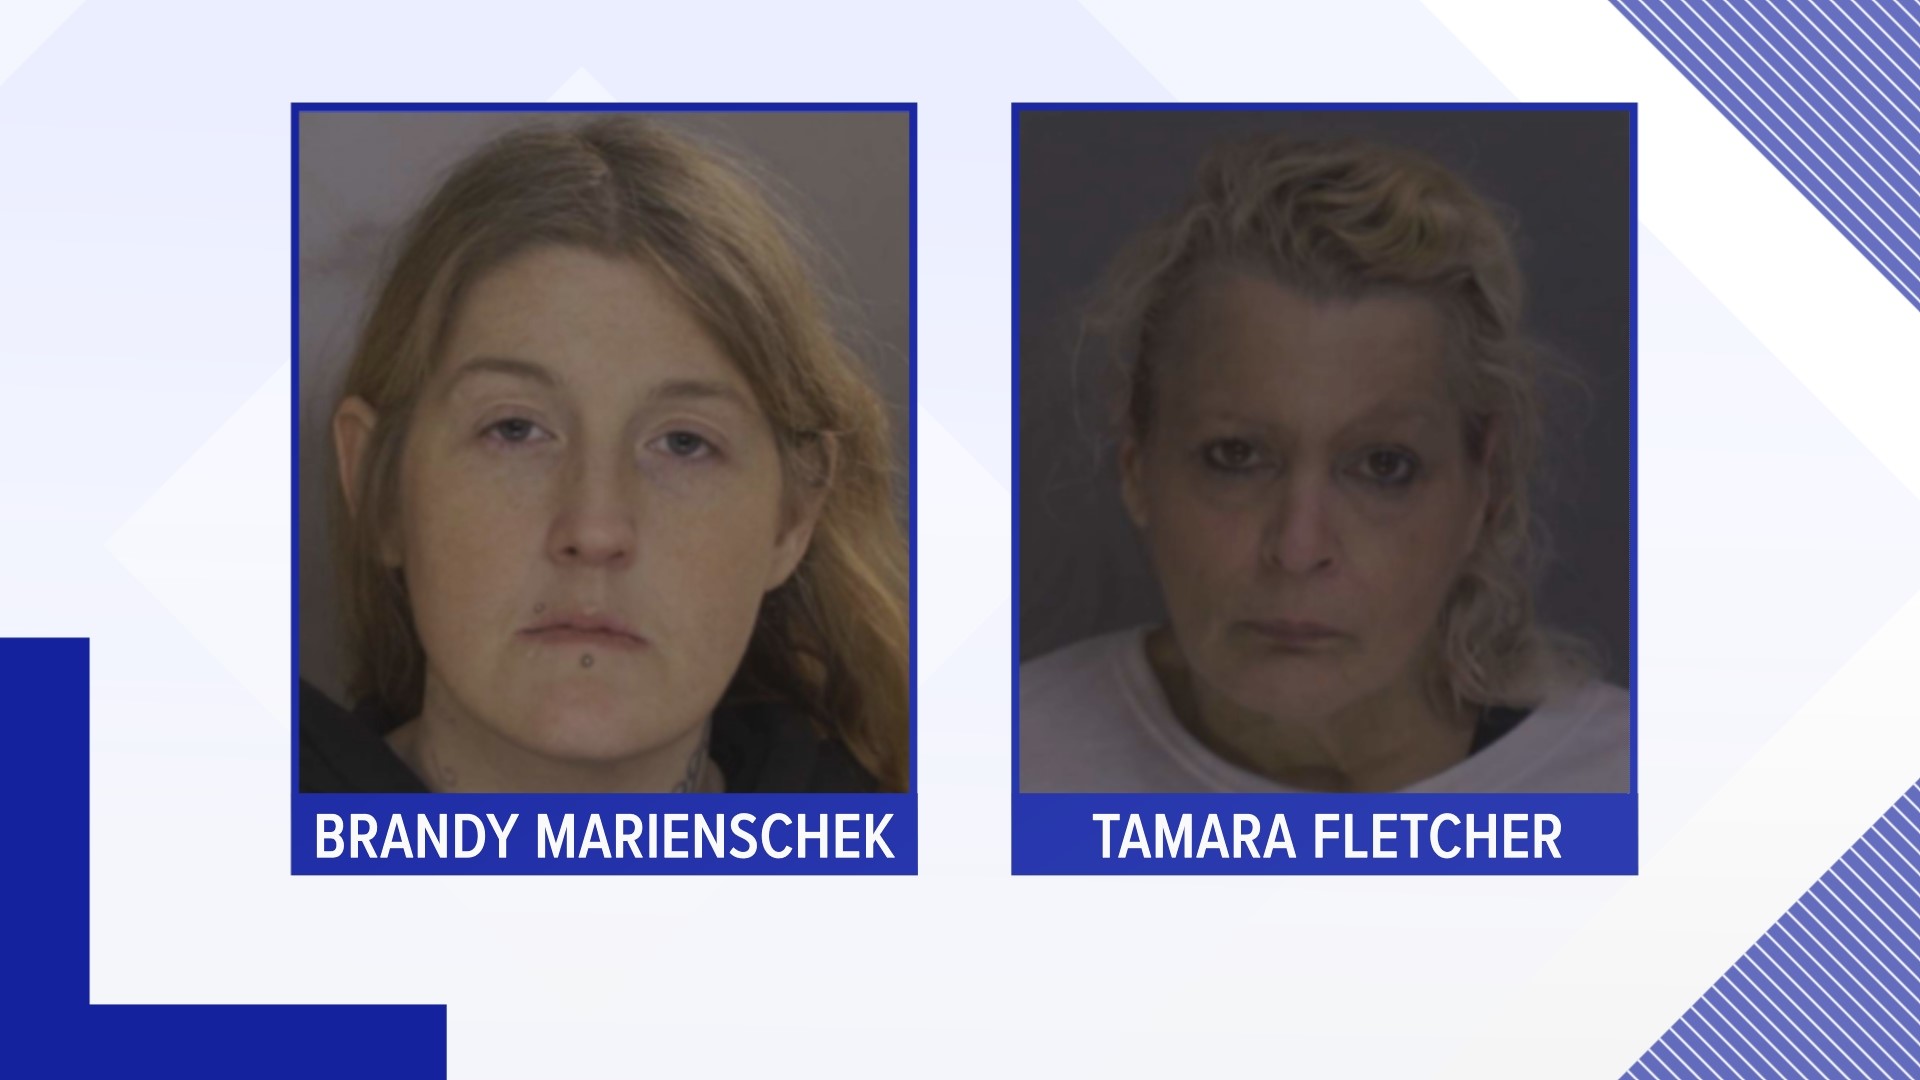 Detectives say Tamara Fletcher exchanged her food stamps in exchange for drugs Brandy Marienschek was selling.